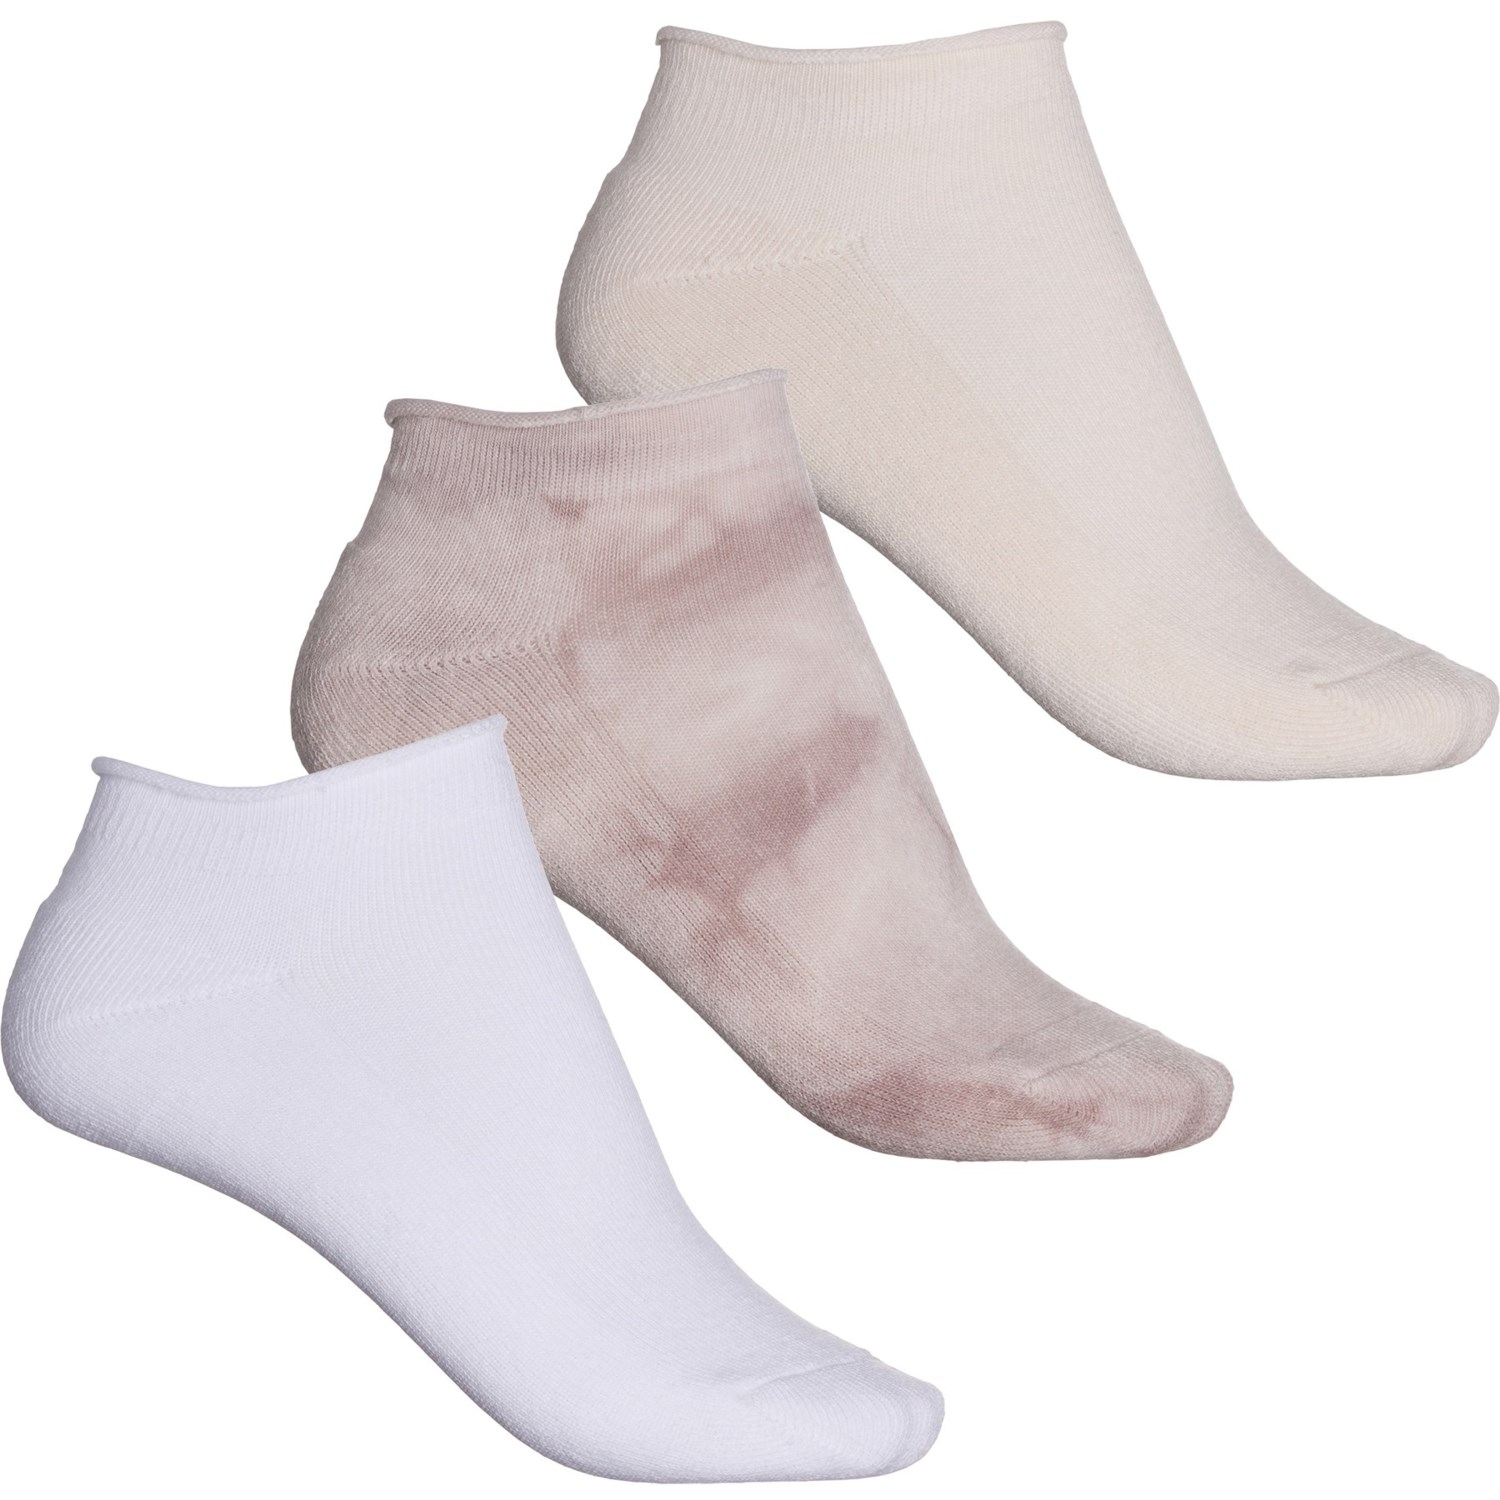 Lemon Half Cushion Terry Cloud Rolltop Low-Cut Socks (For Women) - Save 50%